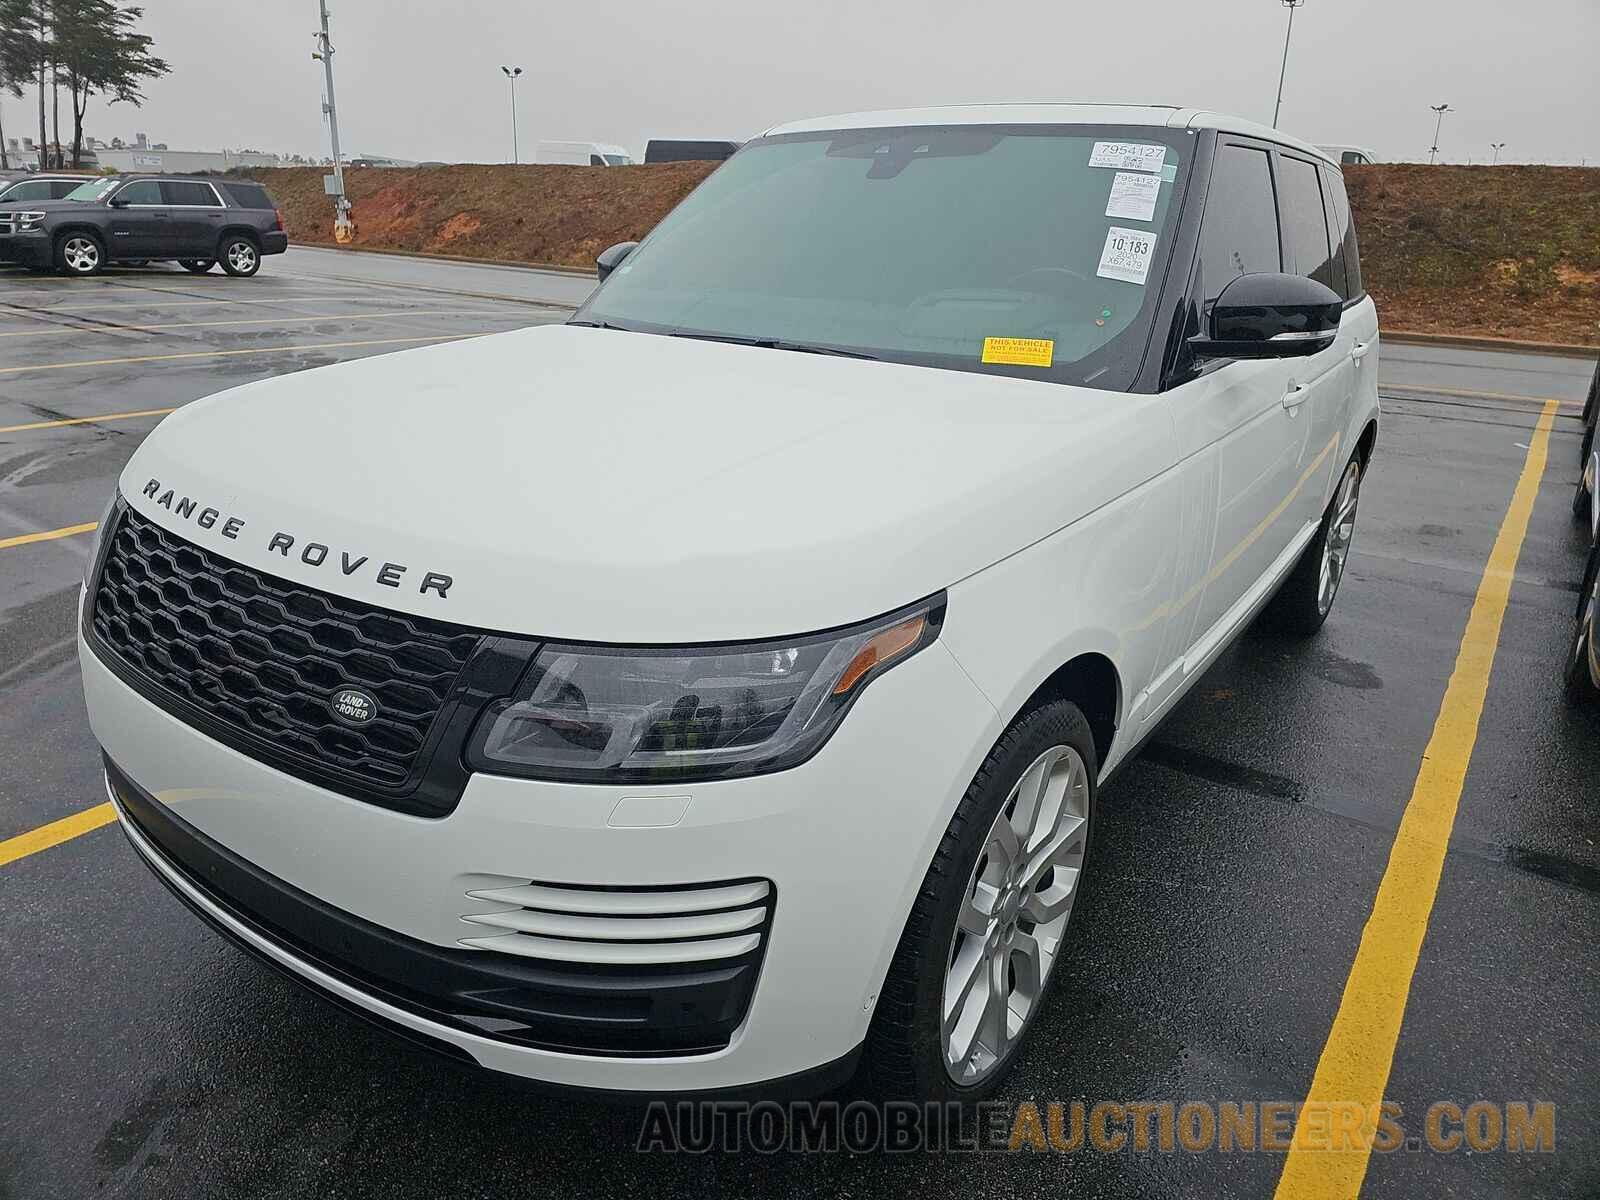 SALGS2SE9LA567845 Land Rover Range Rover 2020